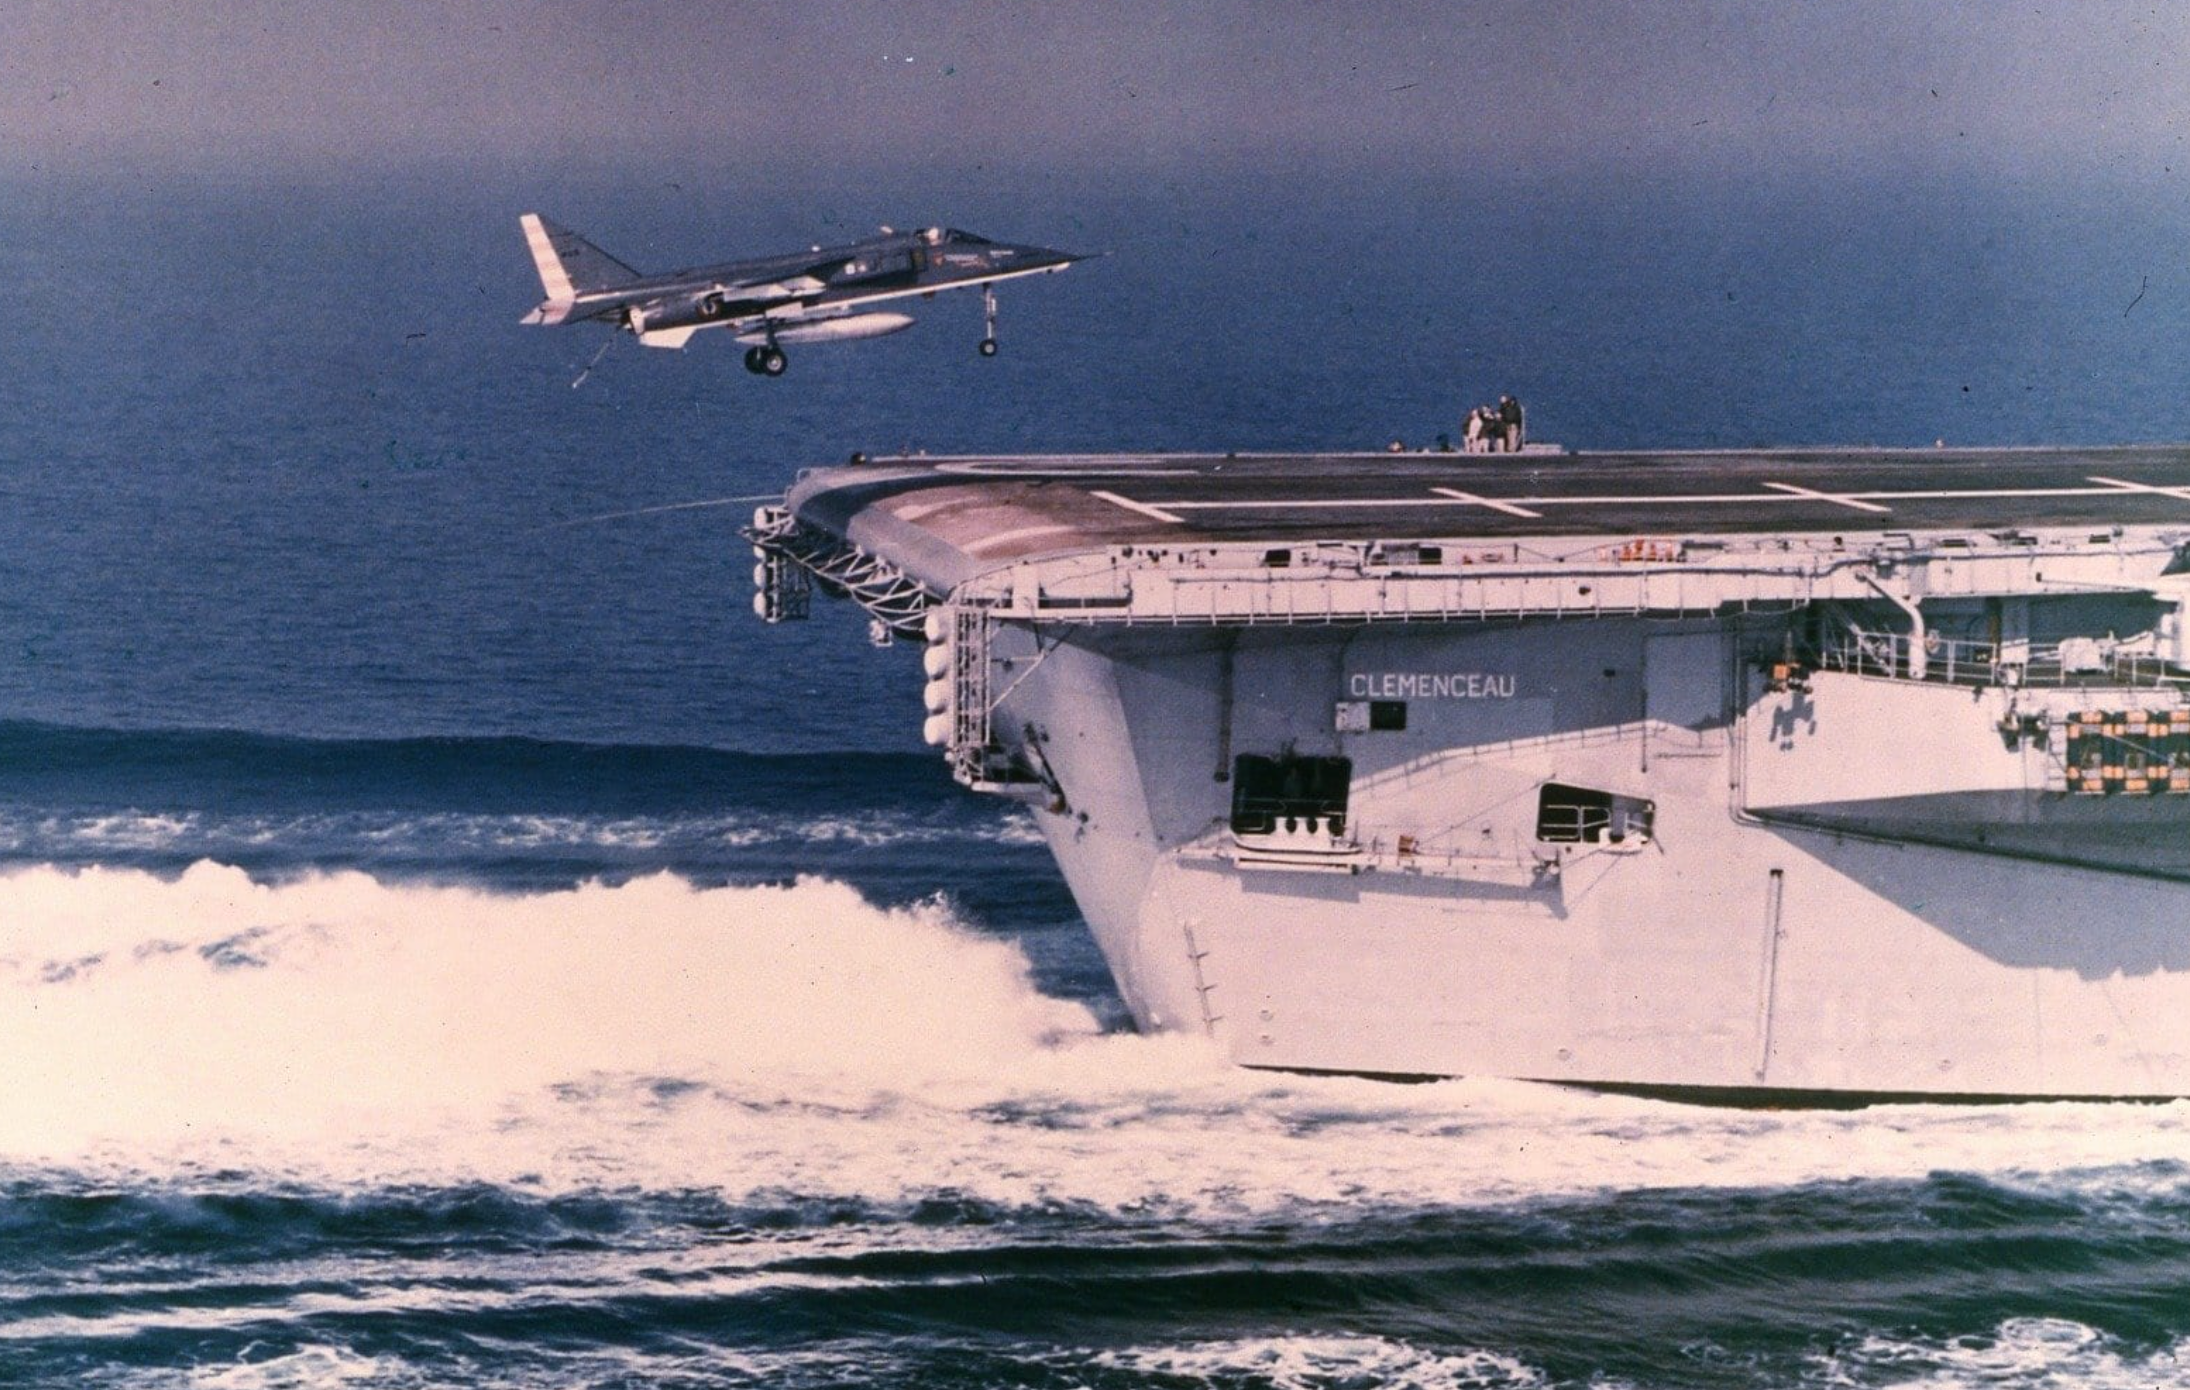 A French Air Force SEPECAT Jaguar Attack landing on an aircraft carrier.